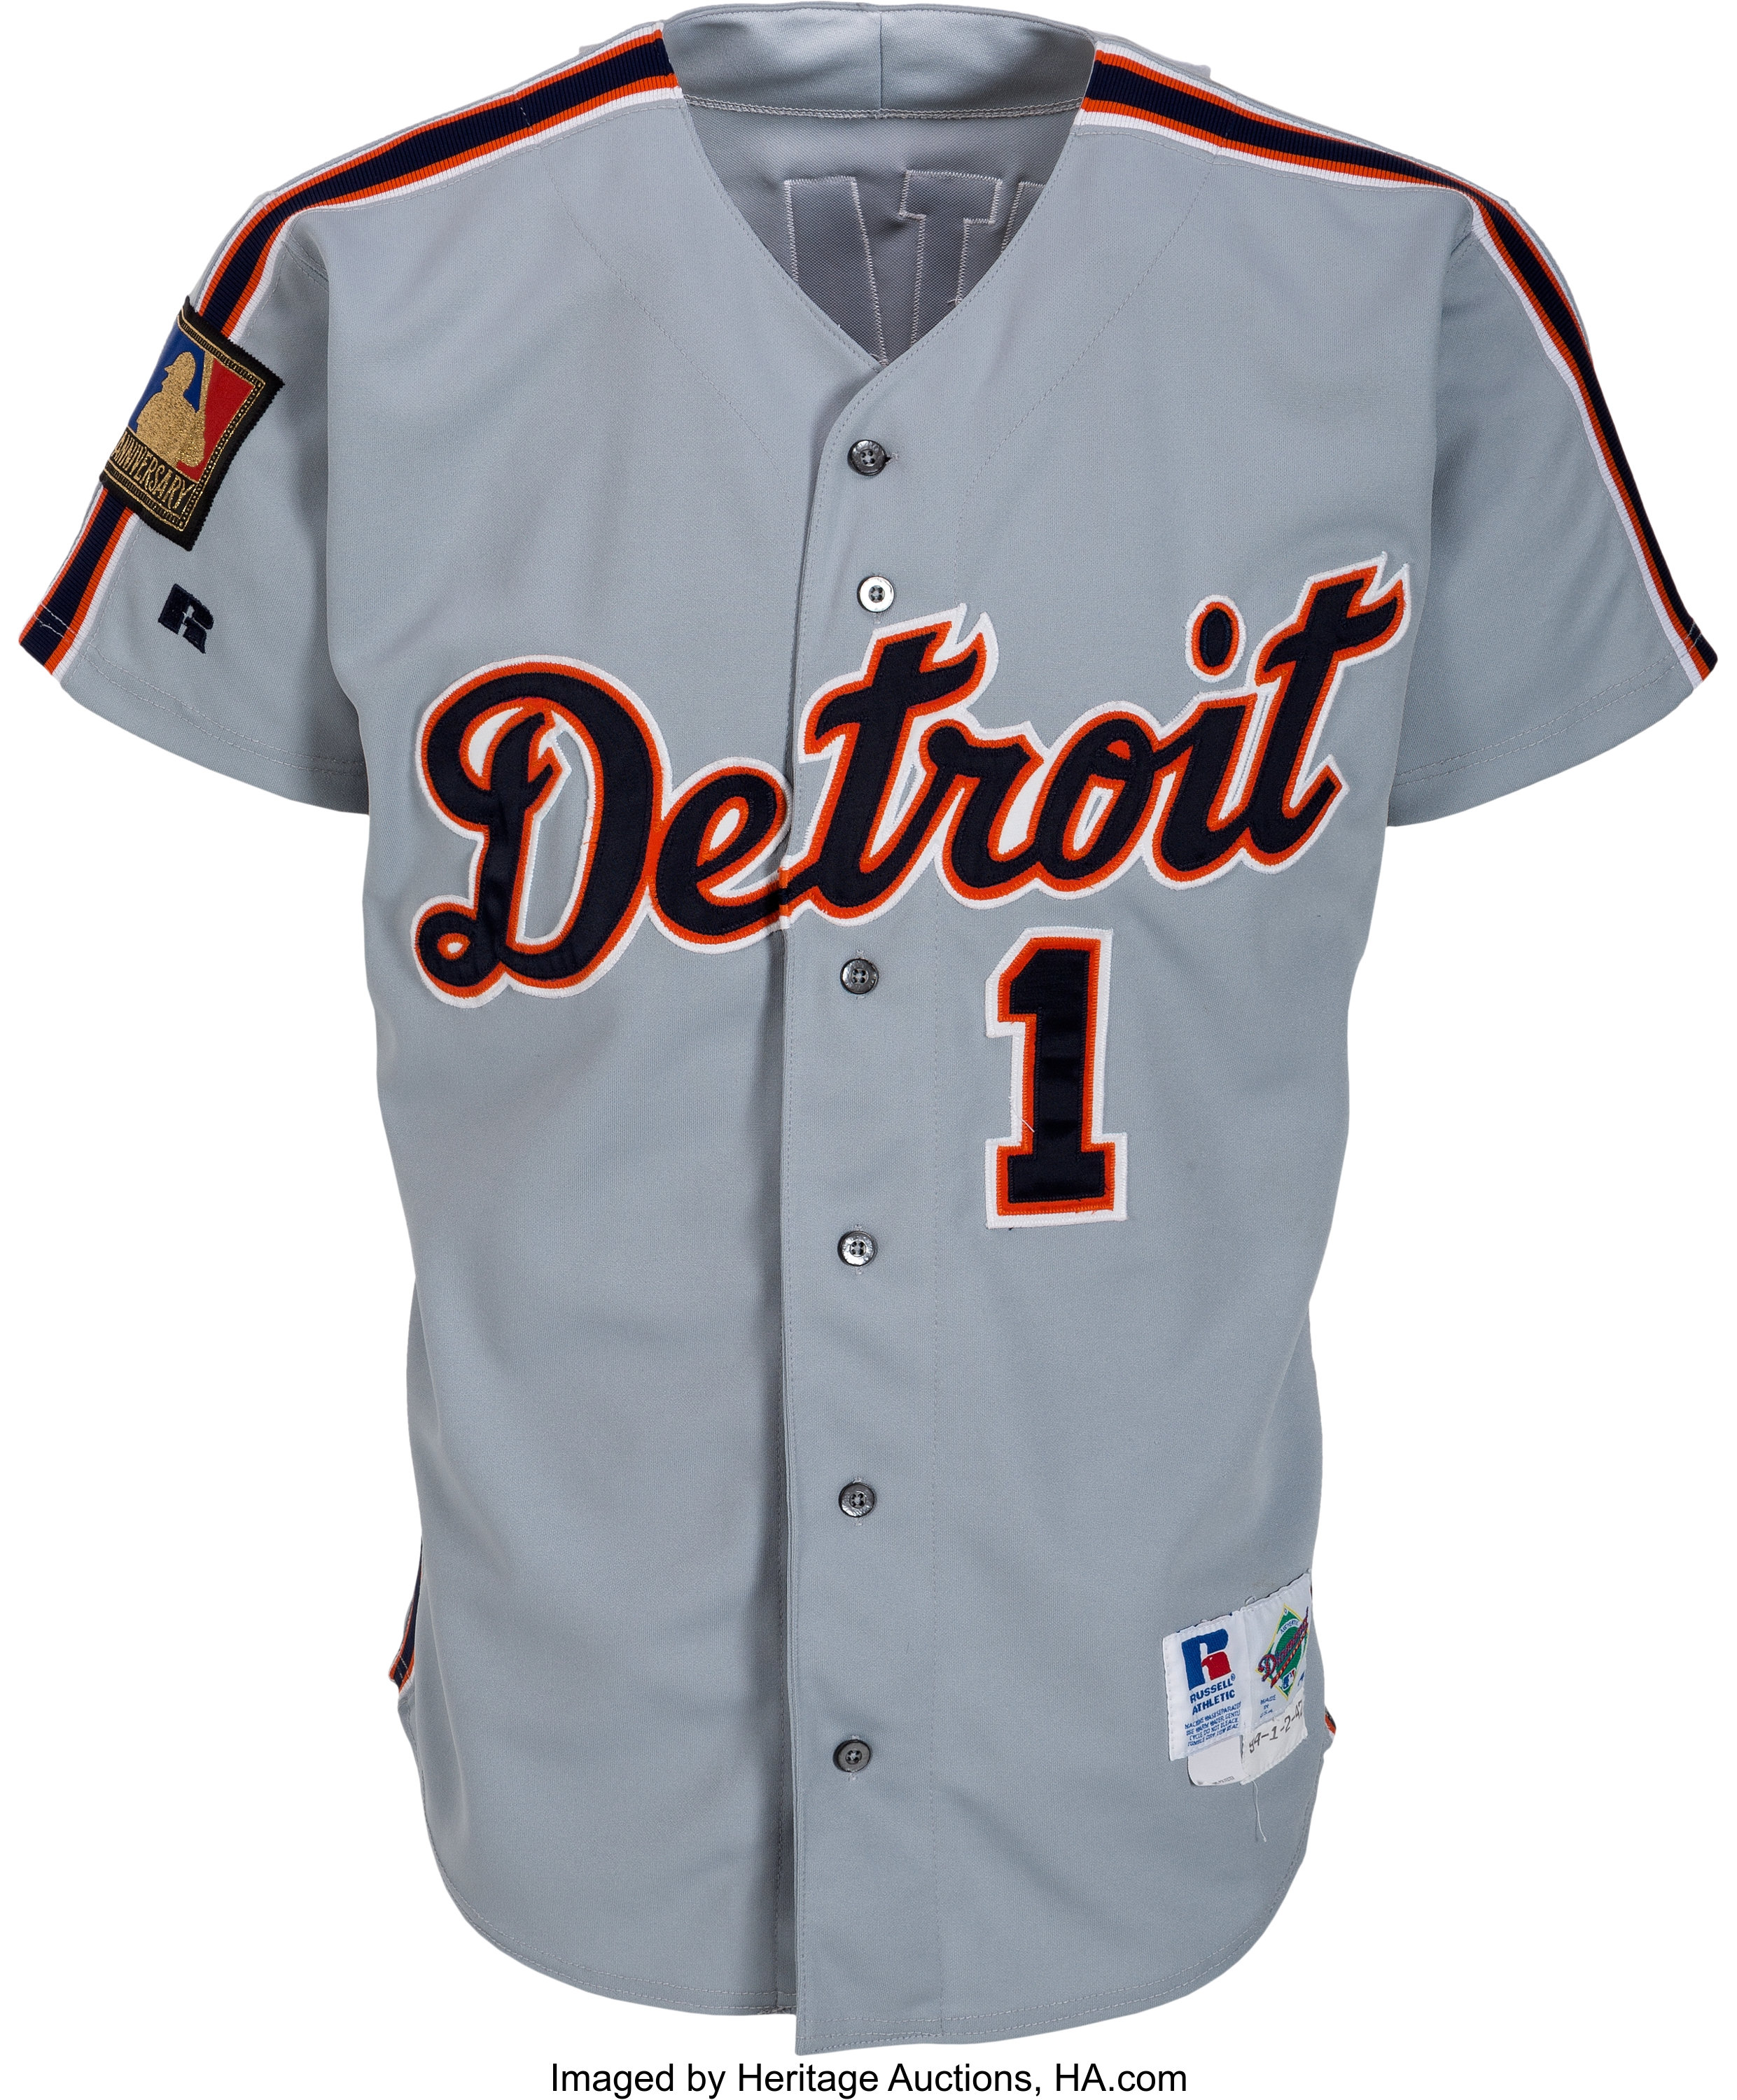 Lou Whitaker #1 Detroit Tigers Men's Nike Home Replica Jersey by Vintage Detroit Collection